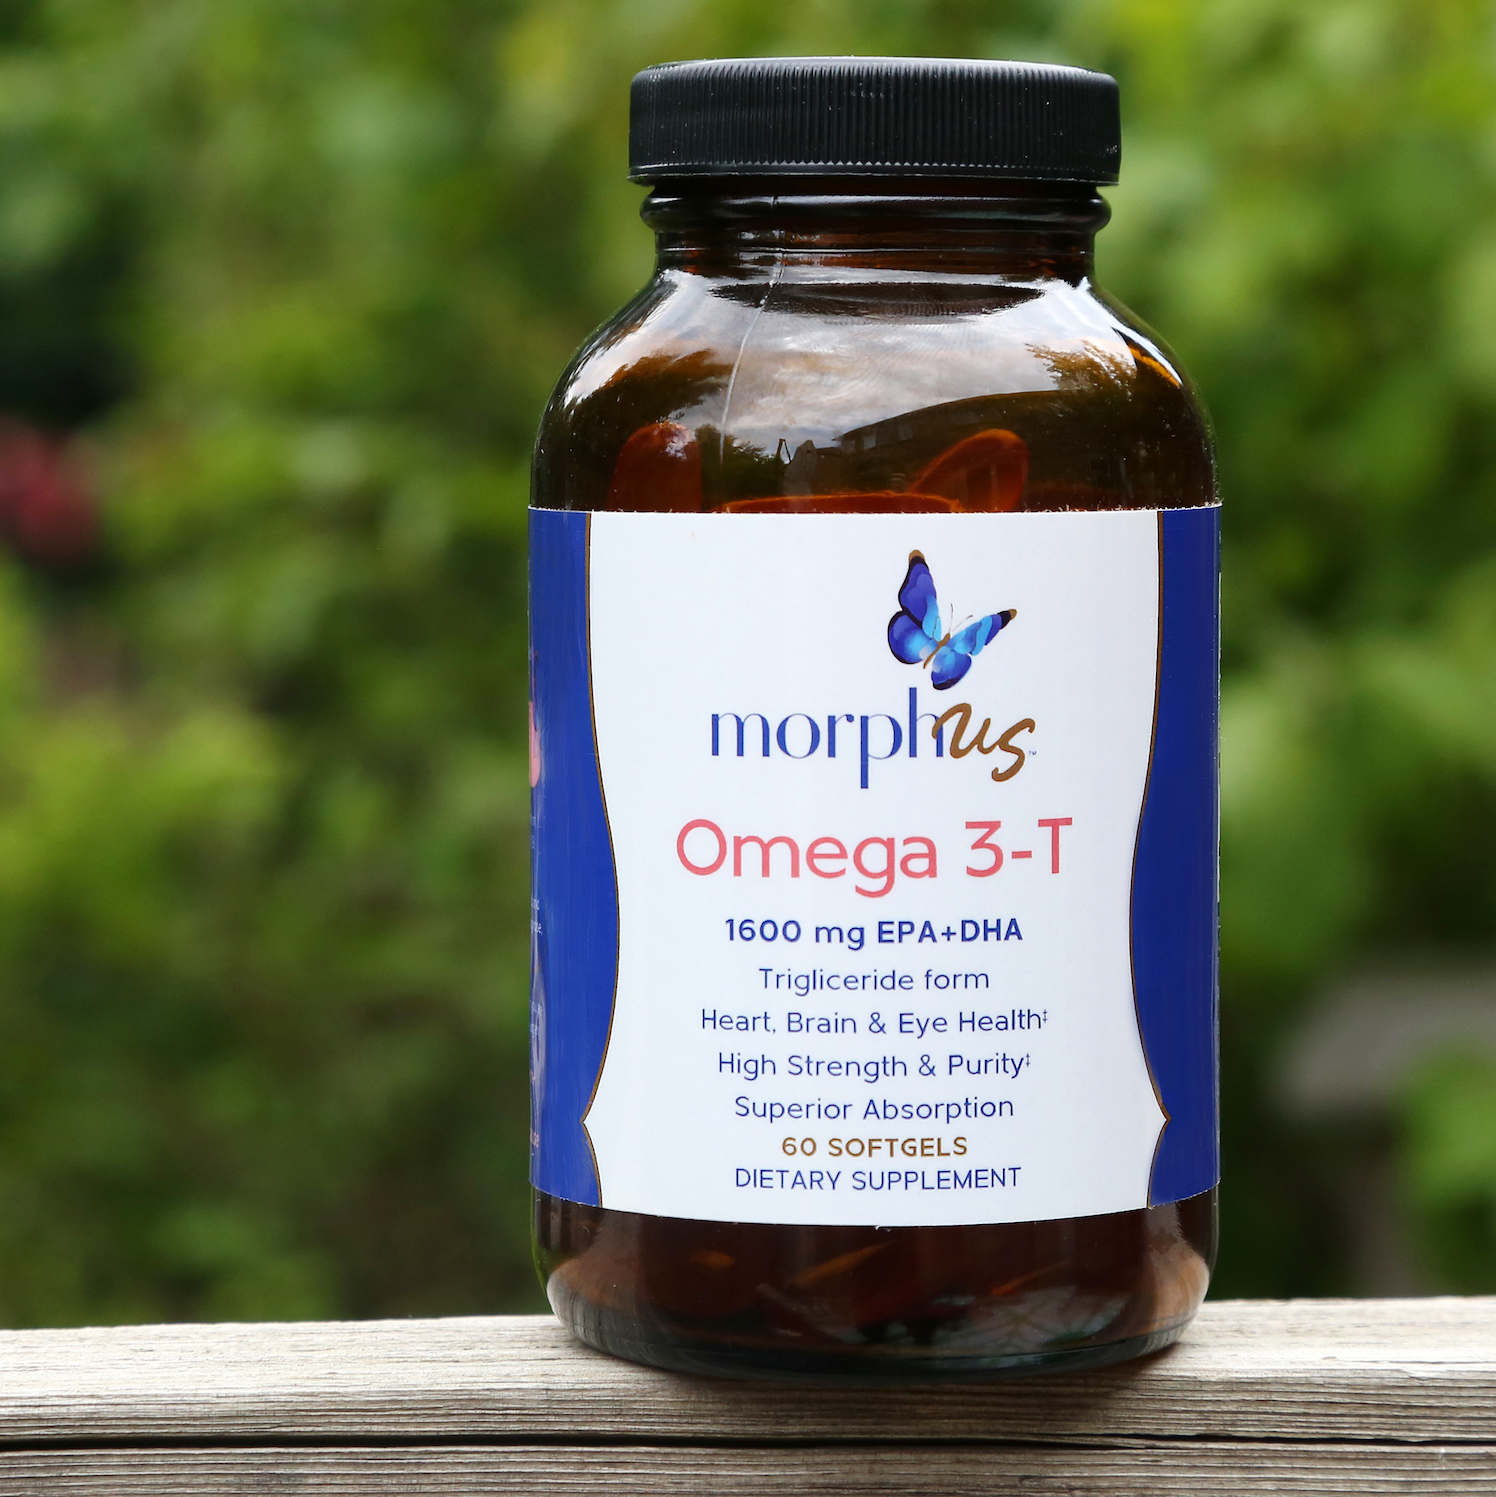 omega 3-t fish oil supplement